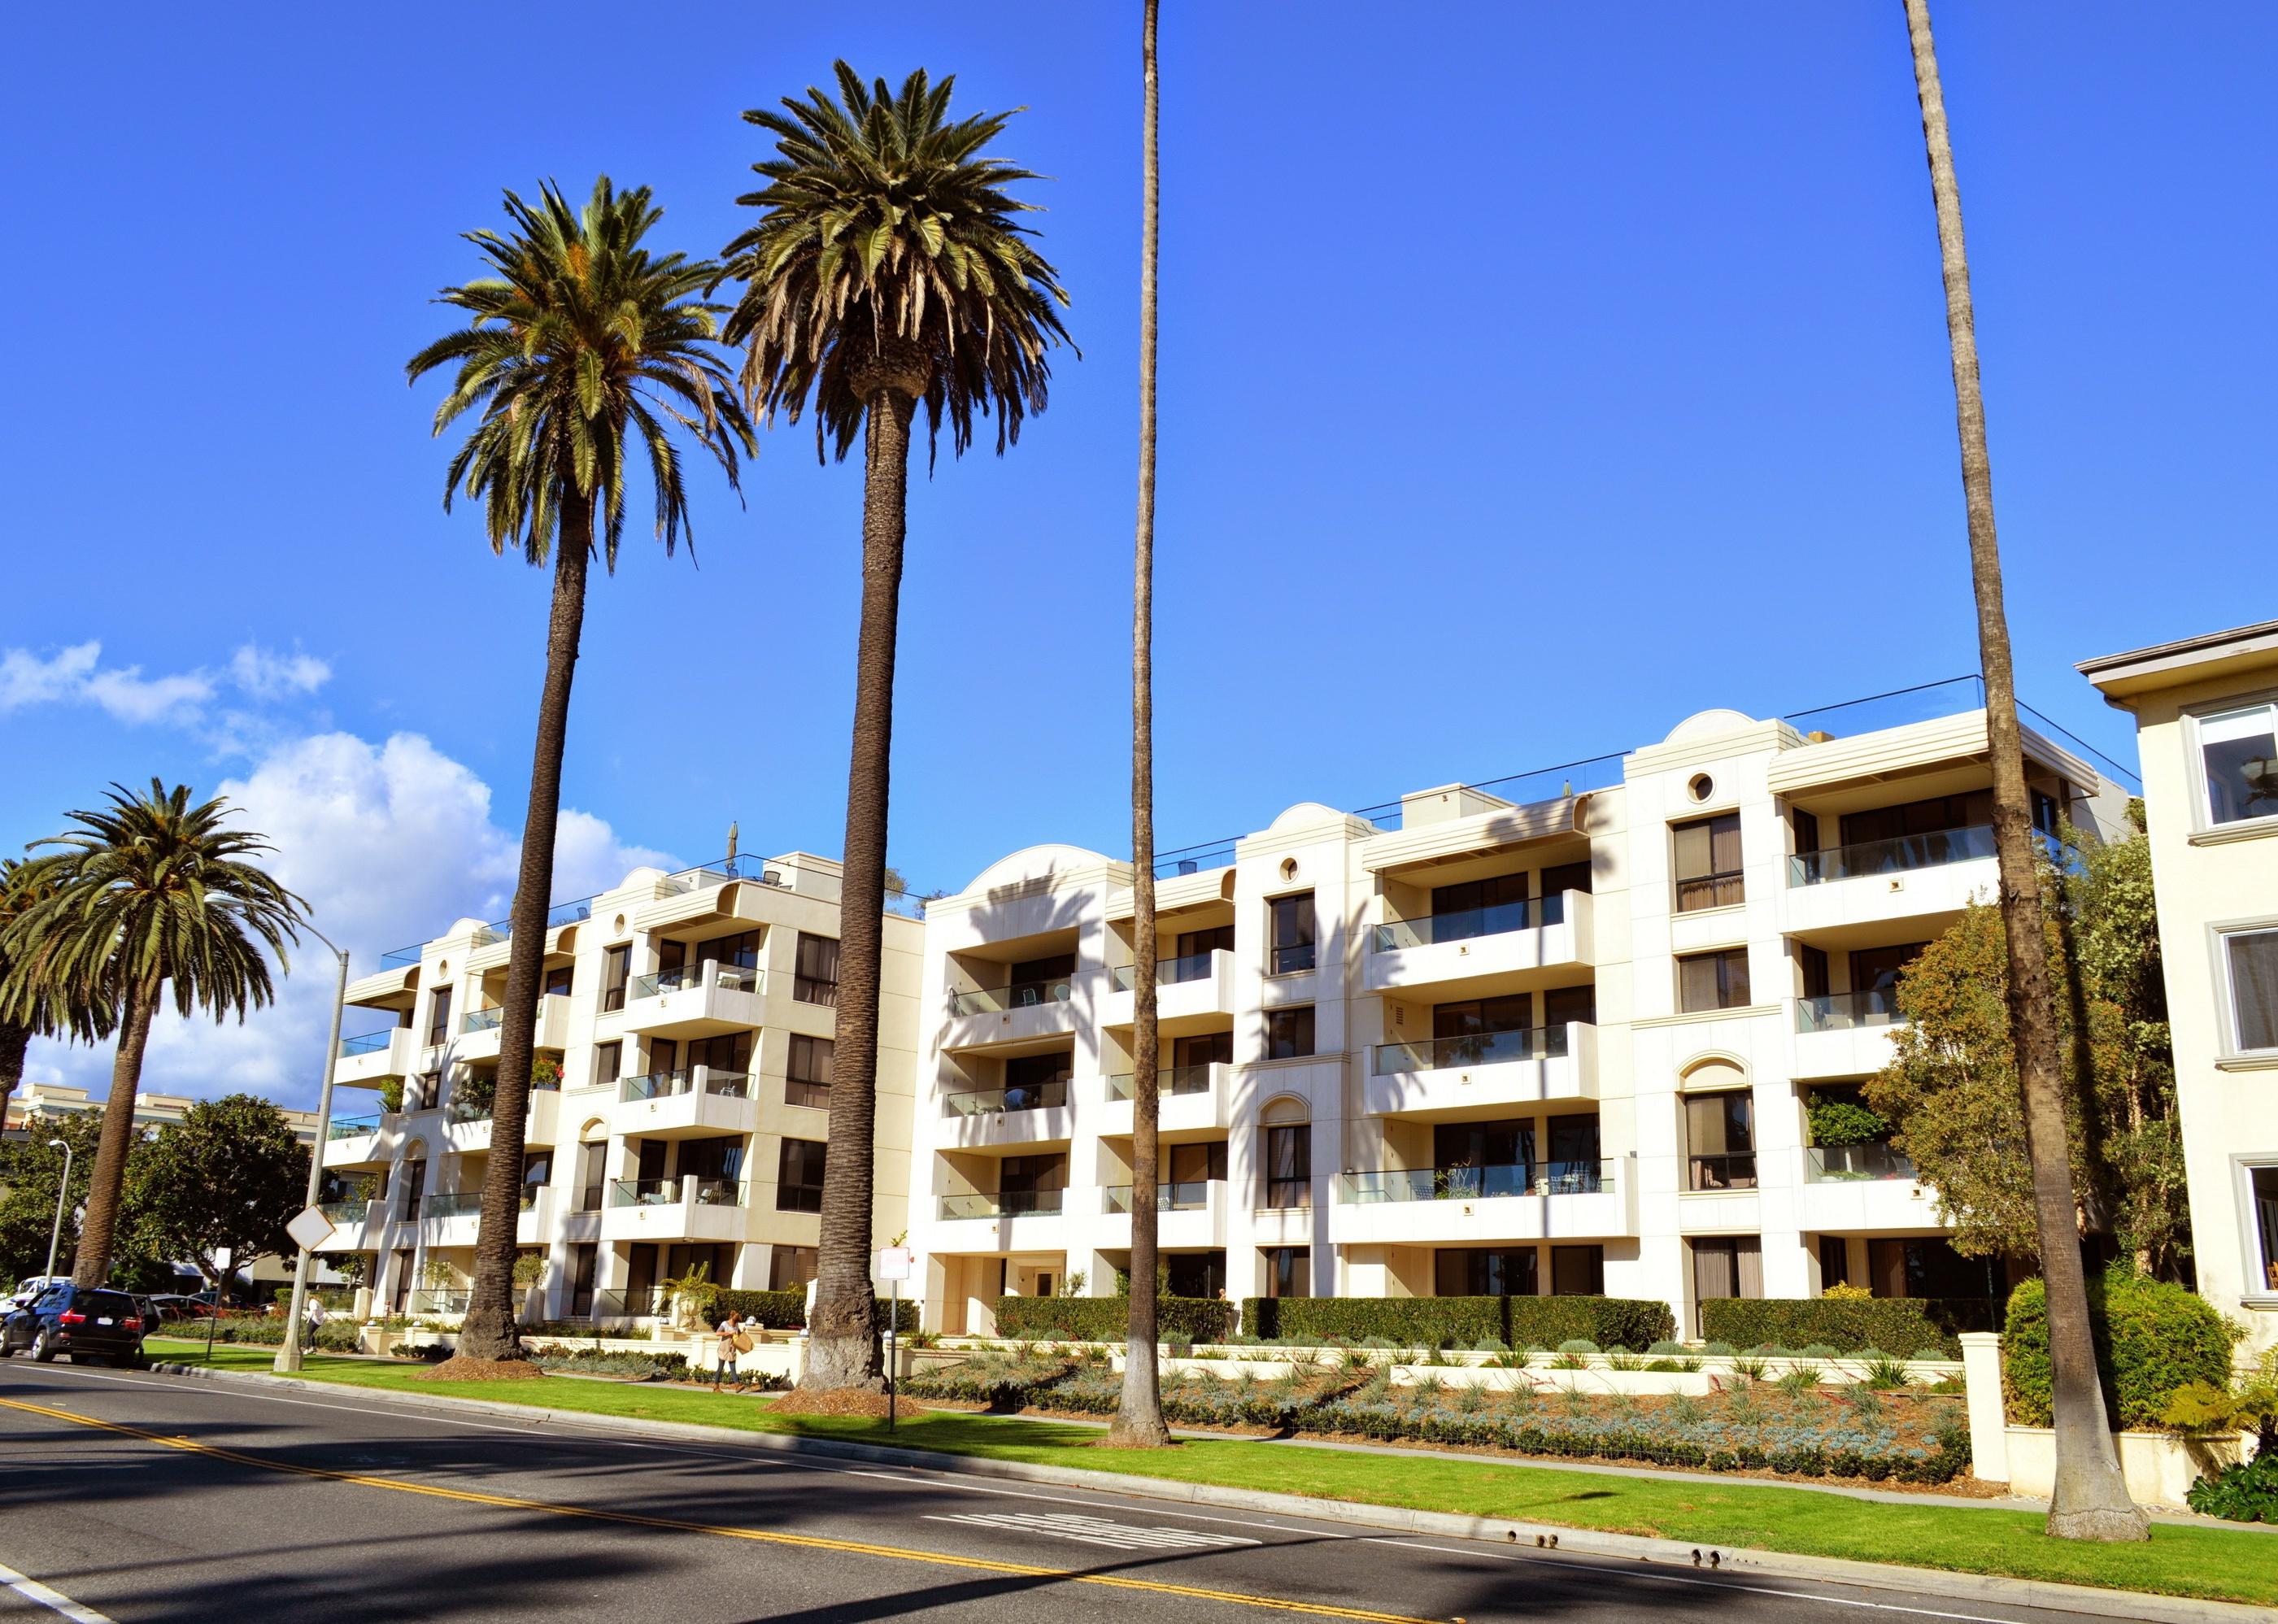 Modern apartment buildings in Santa Monica